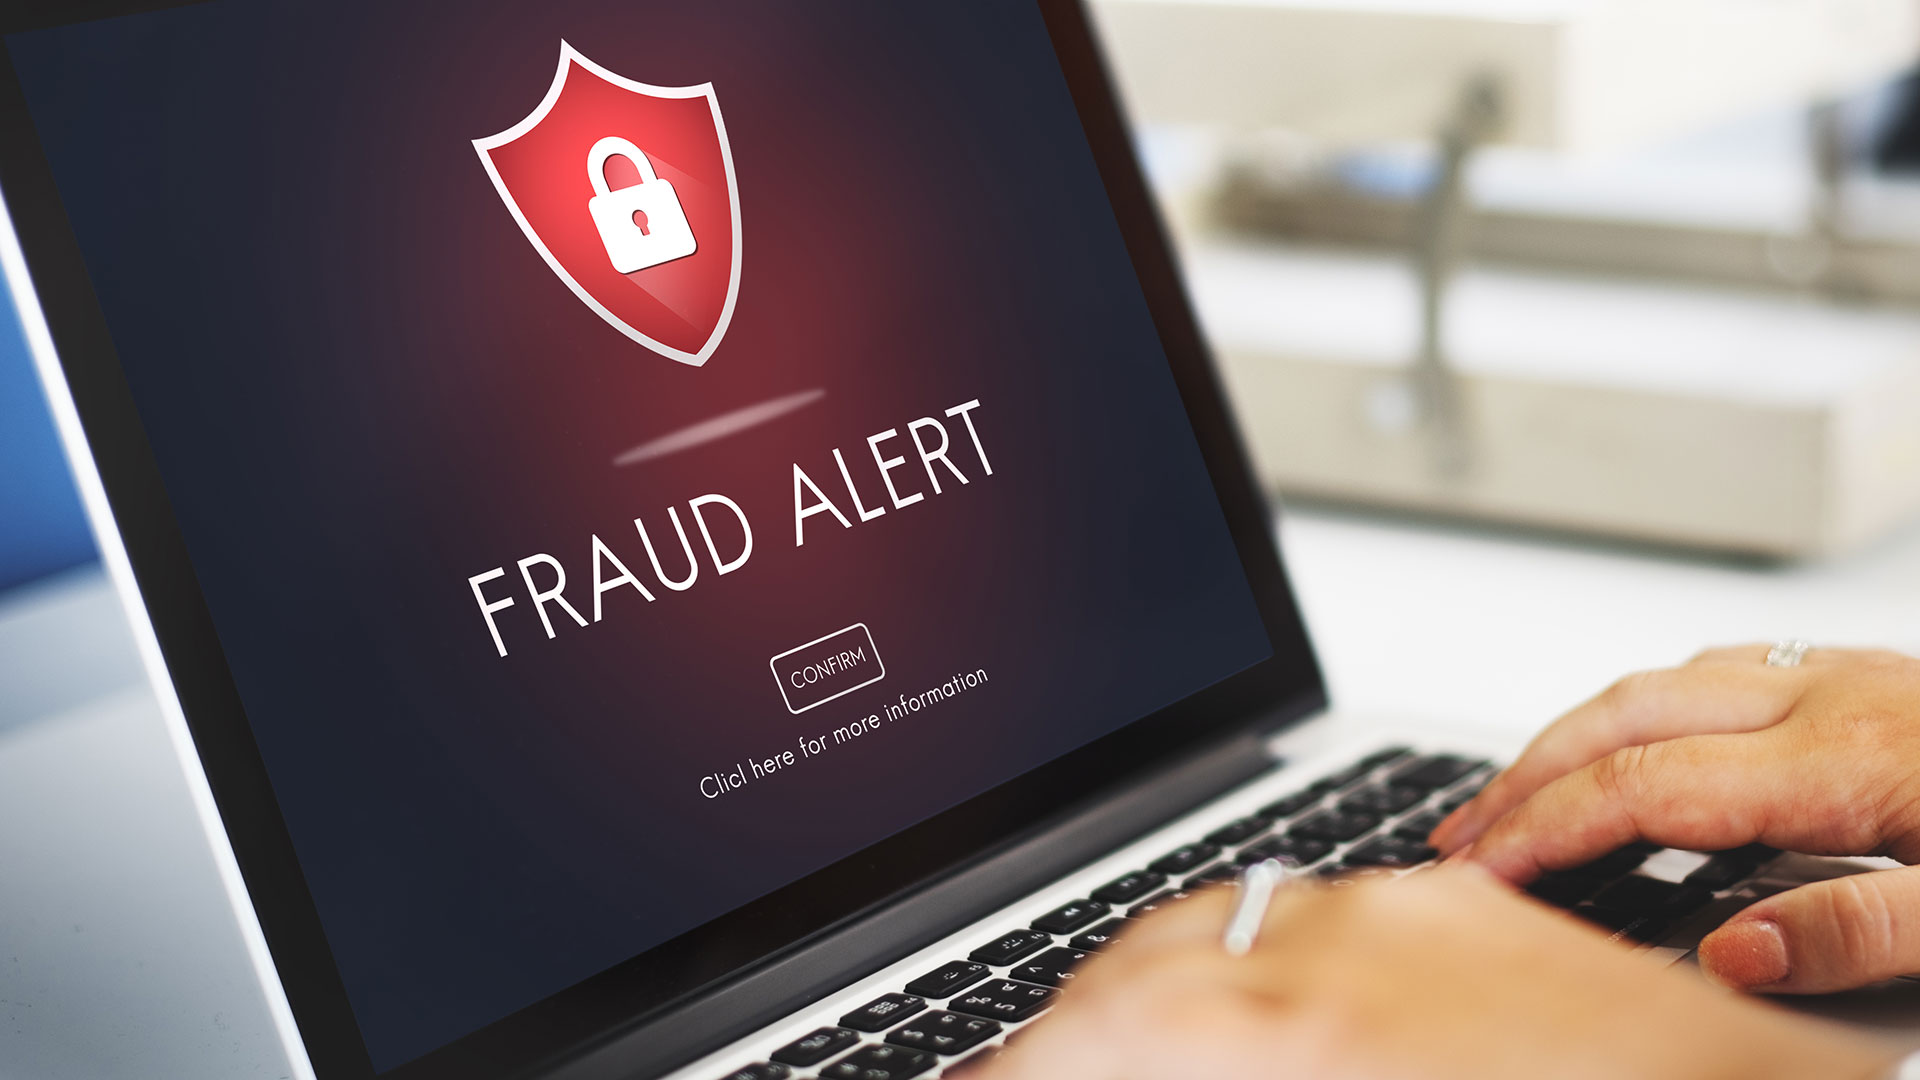 Scam fraud alert message on laptop